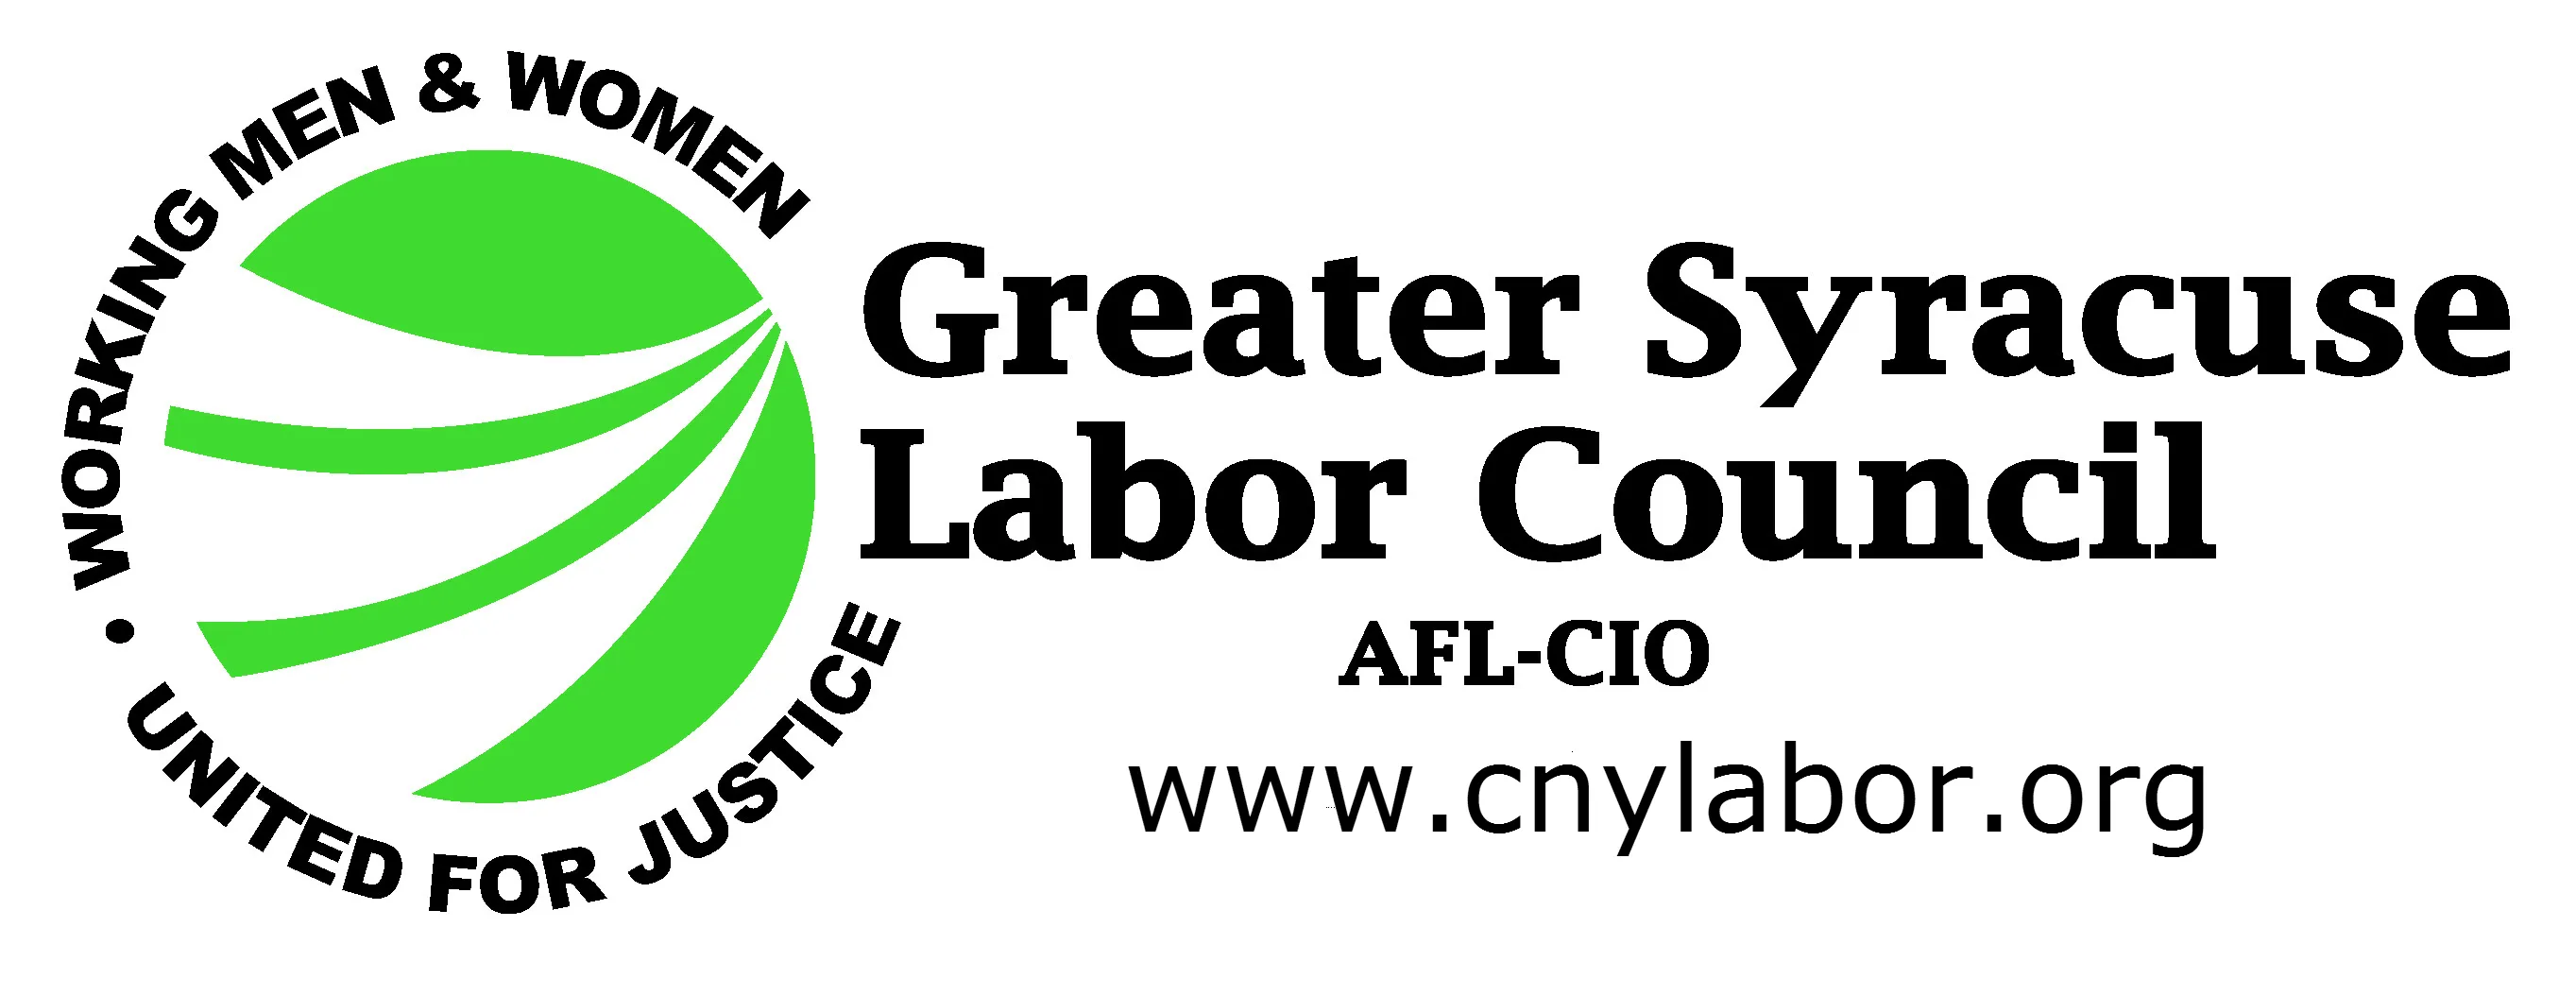 greater_syracuse_labor_council_logo_w_site.jpg